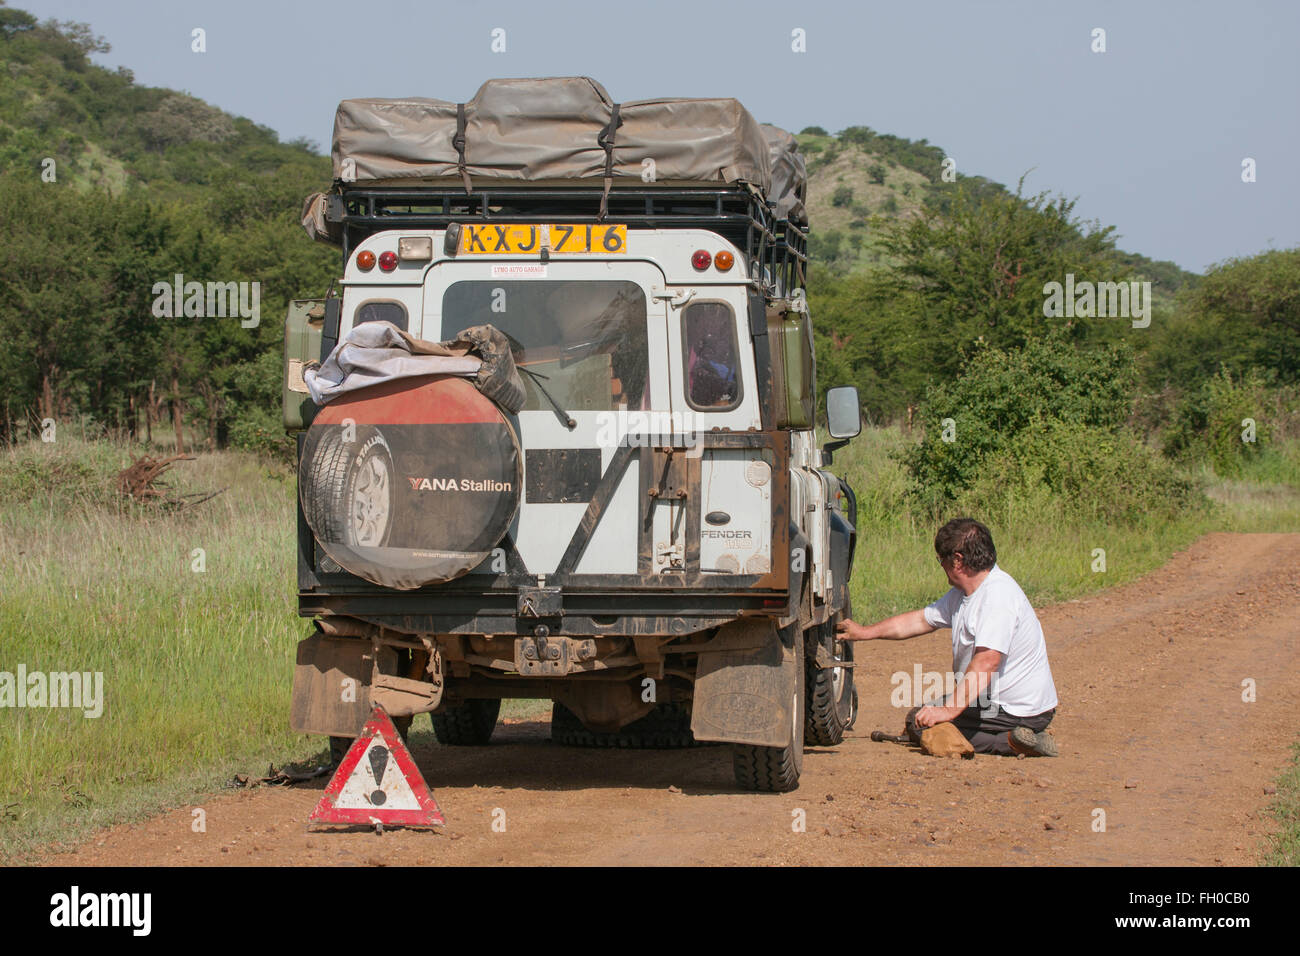 Grobe schmuddelig alten Land Rover Defender 110 im Serengeti Nationalpark Tansanias. Abgebaut Stockfoto